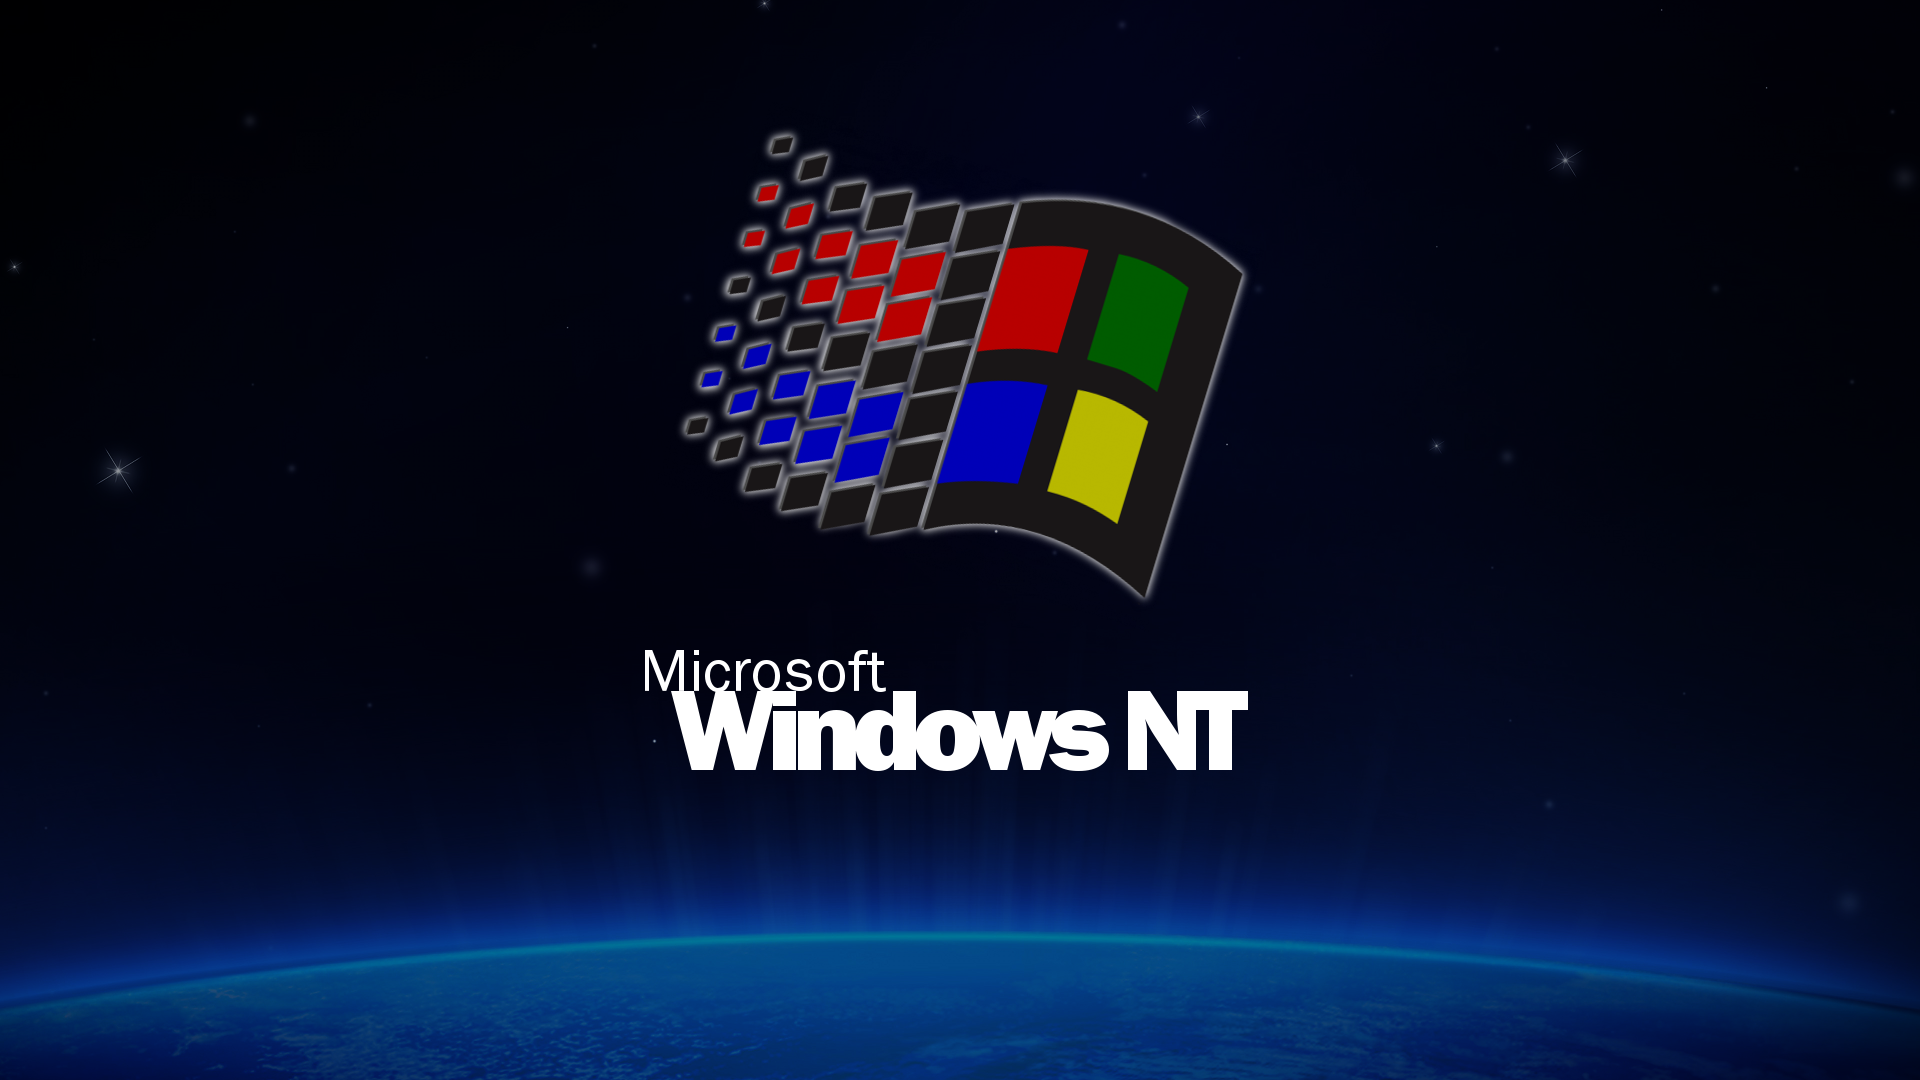 Microsoft windows 58. Windows NT 4 Workstation. Виндовс НТ 4.0. ОС MS Windows NT 4.0 Server. Microsoft Windows NT/2000.